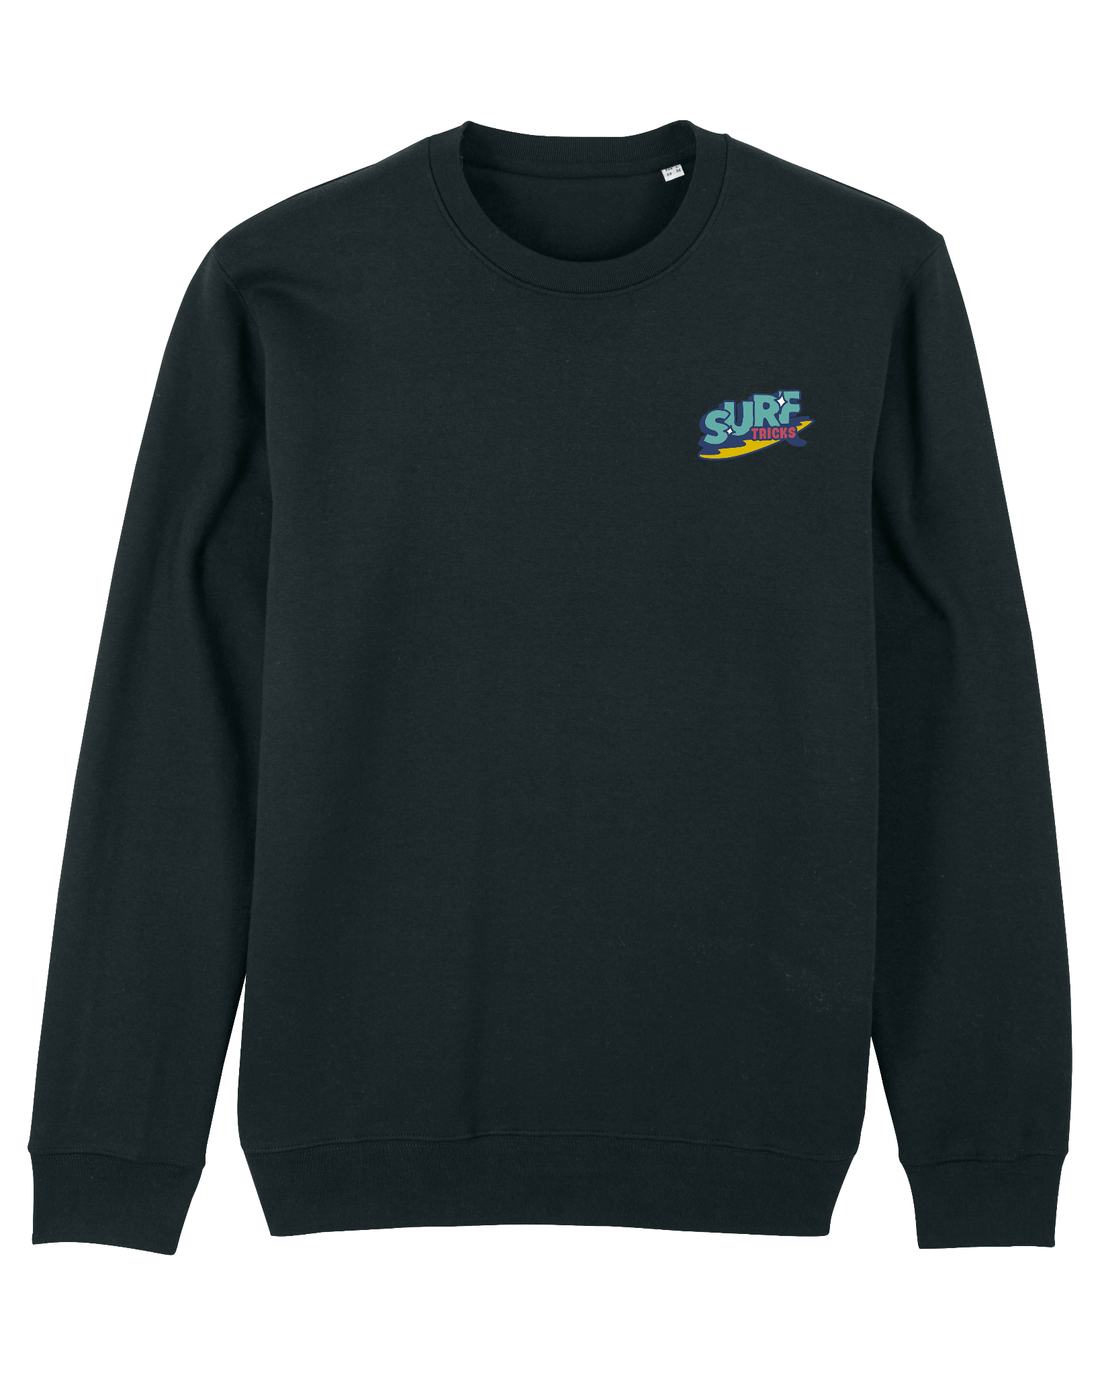 Black Skater Sweatshirt, Surf Tricks Front Print